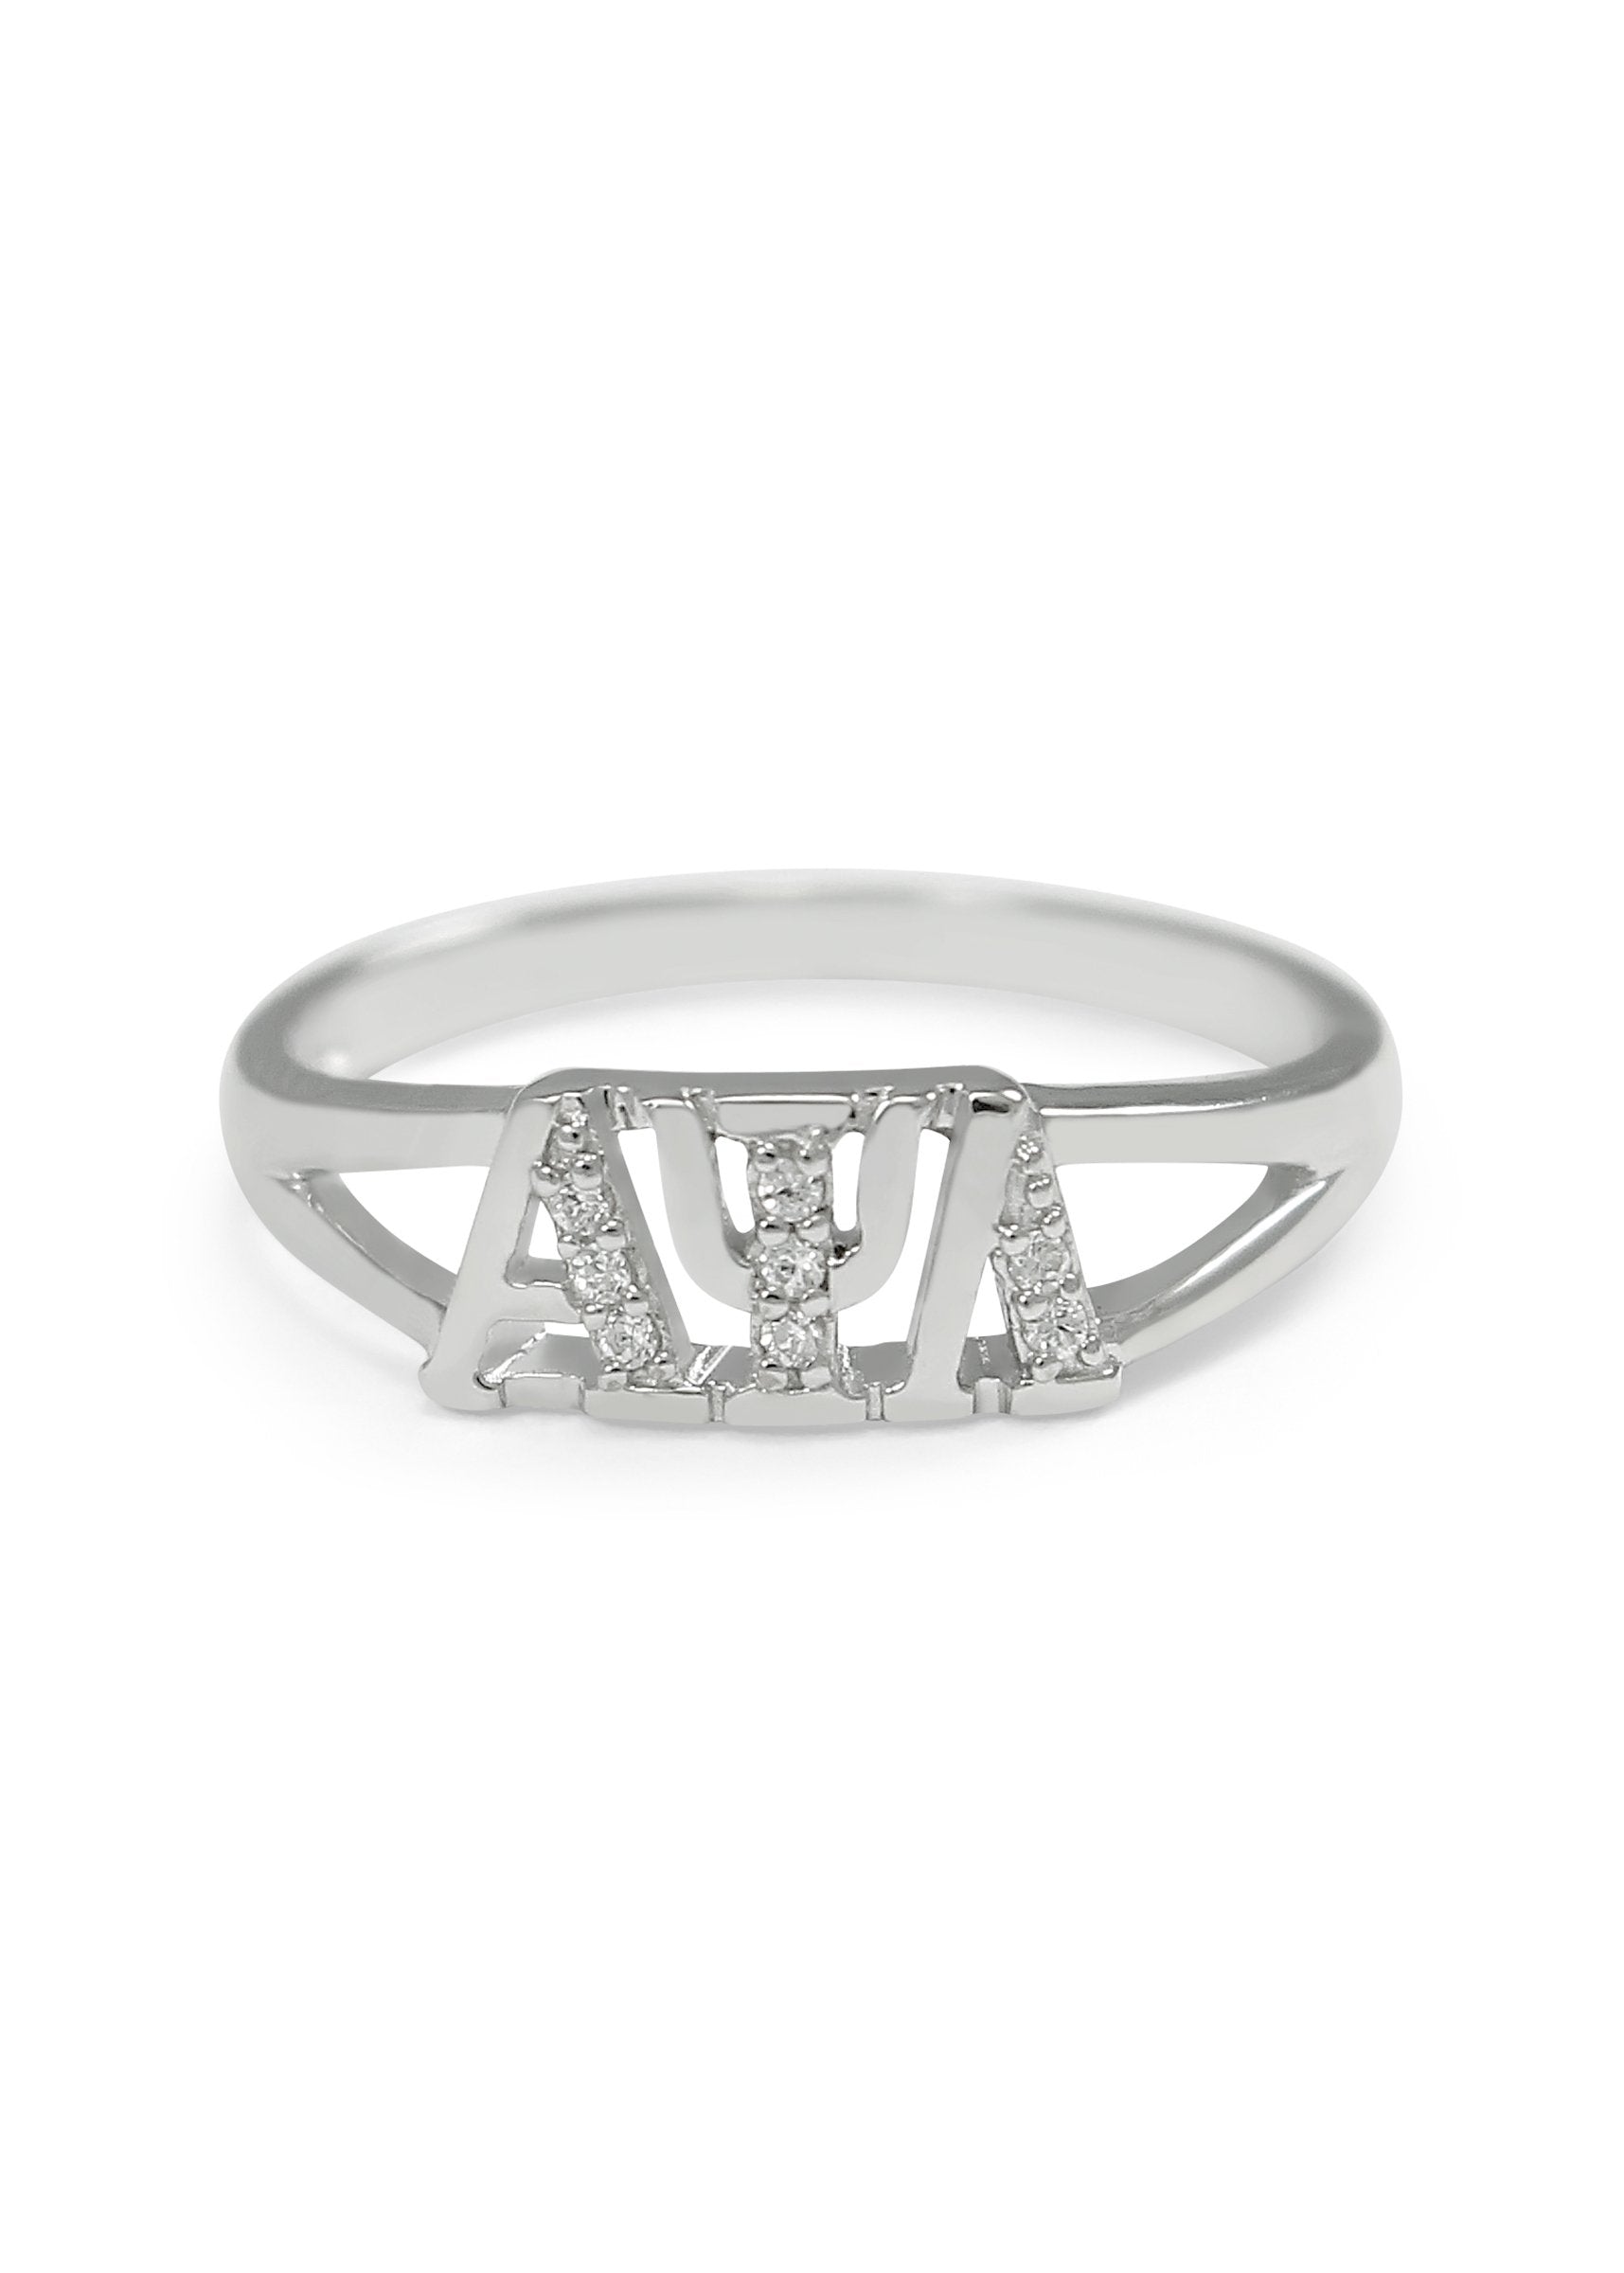 Kappa Alpha Psi 100% Sterling Silver Ring